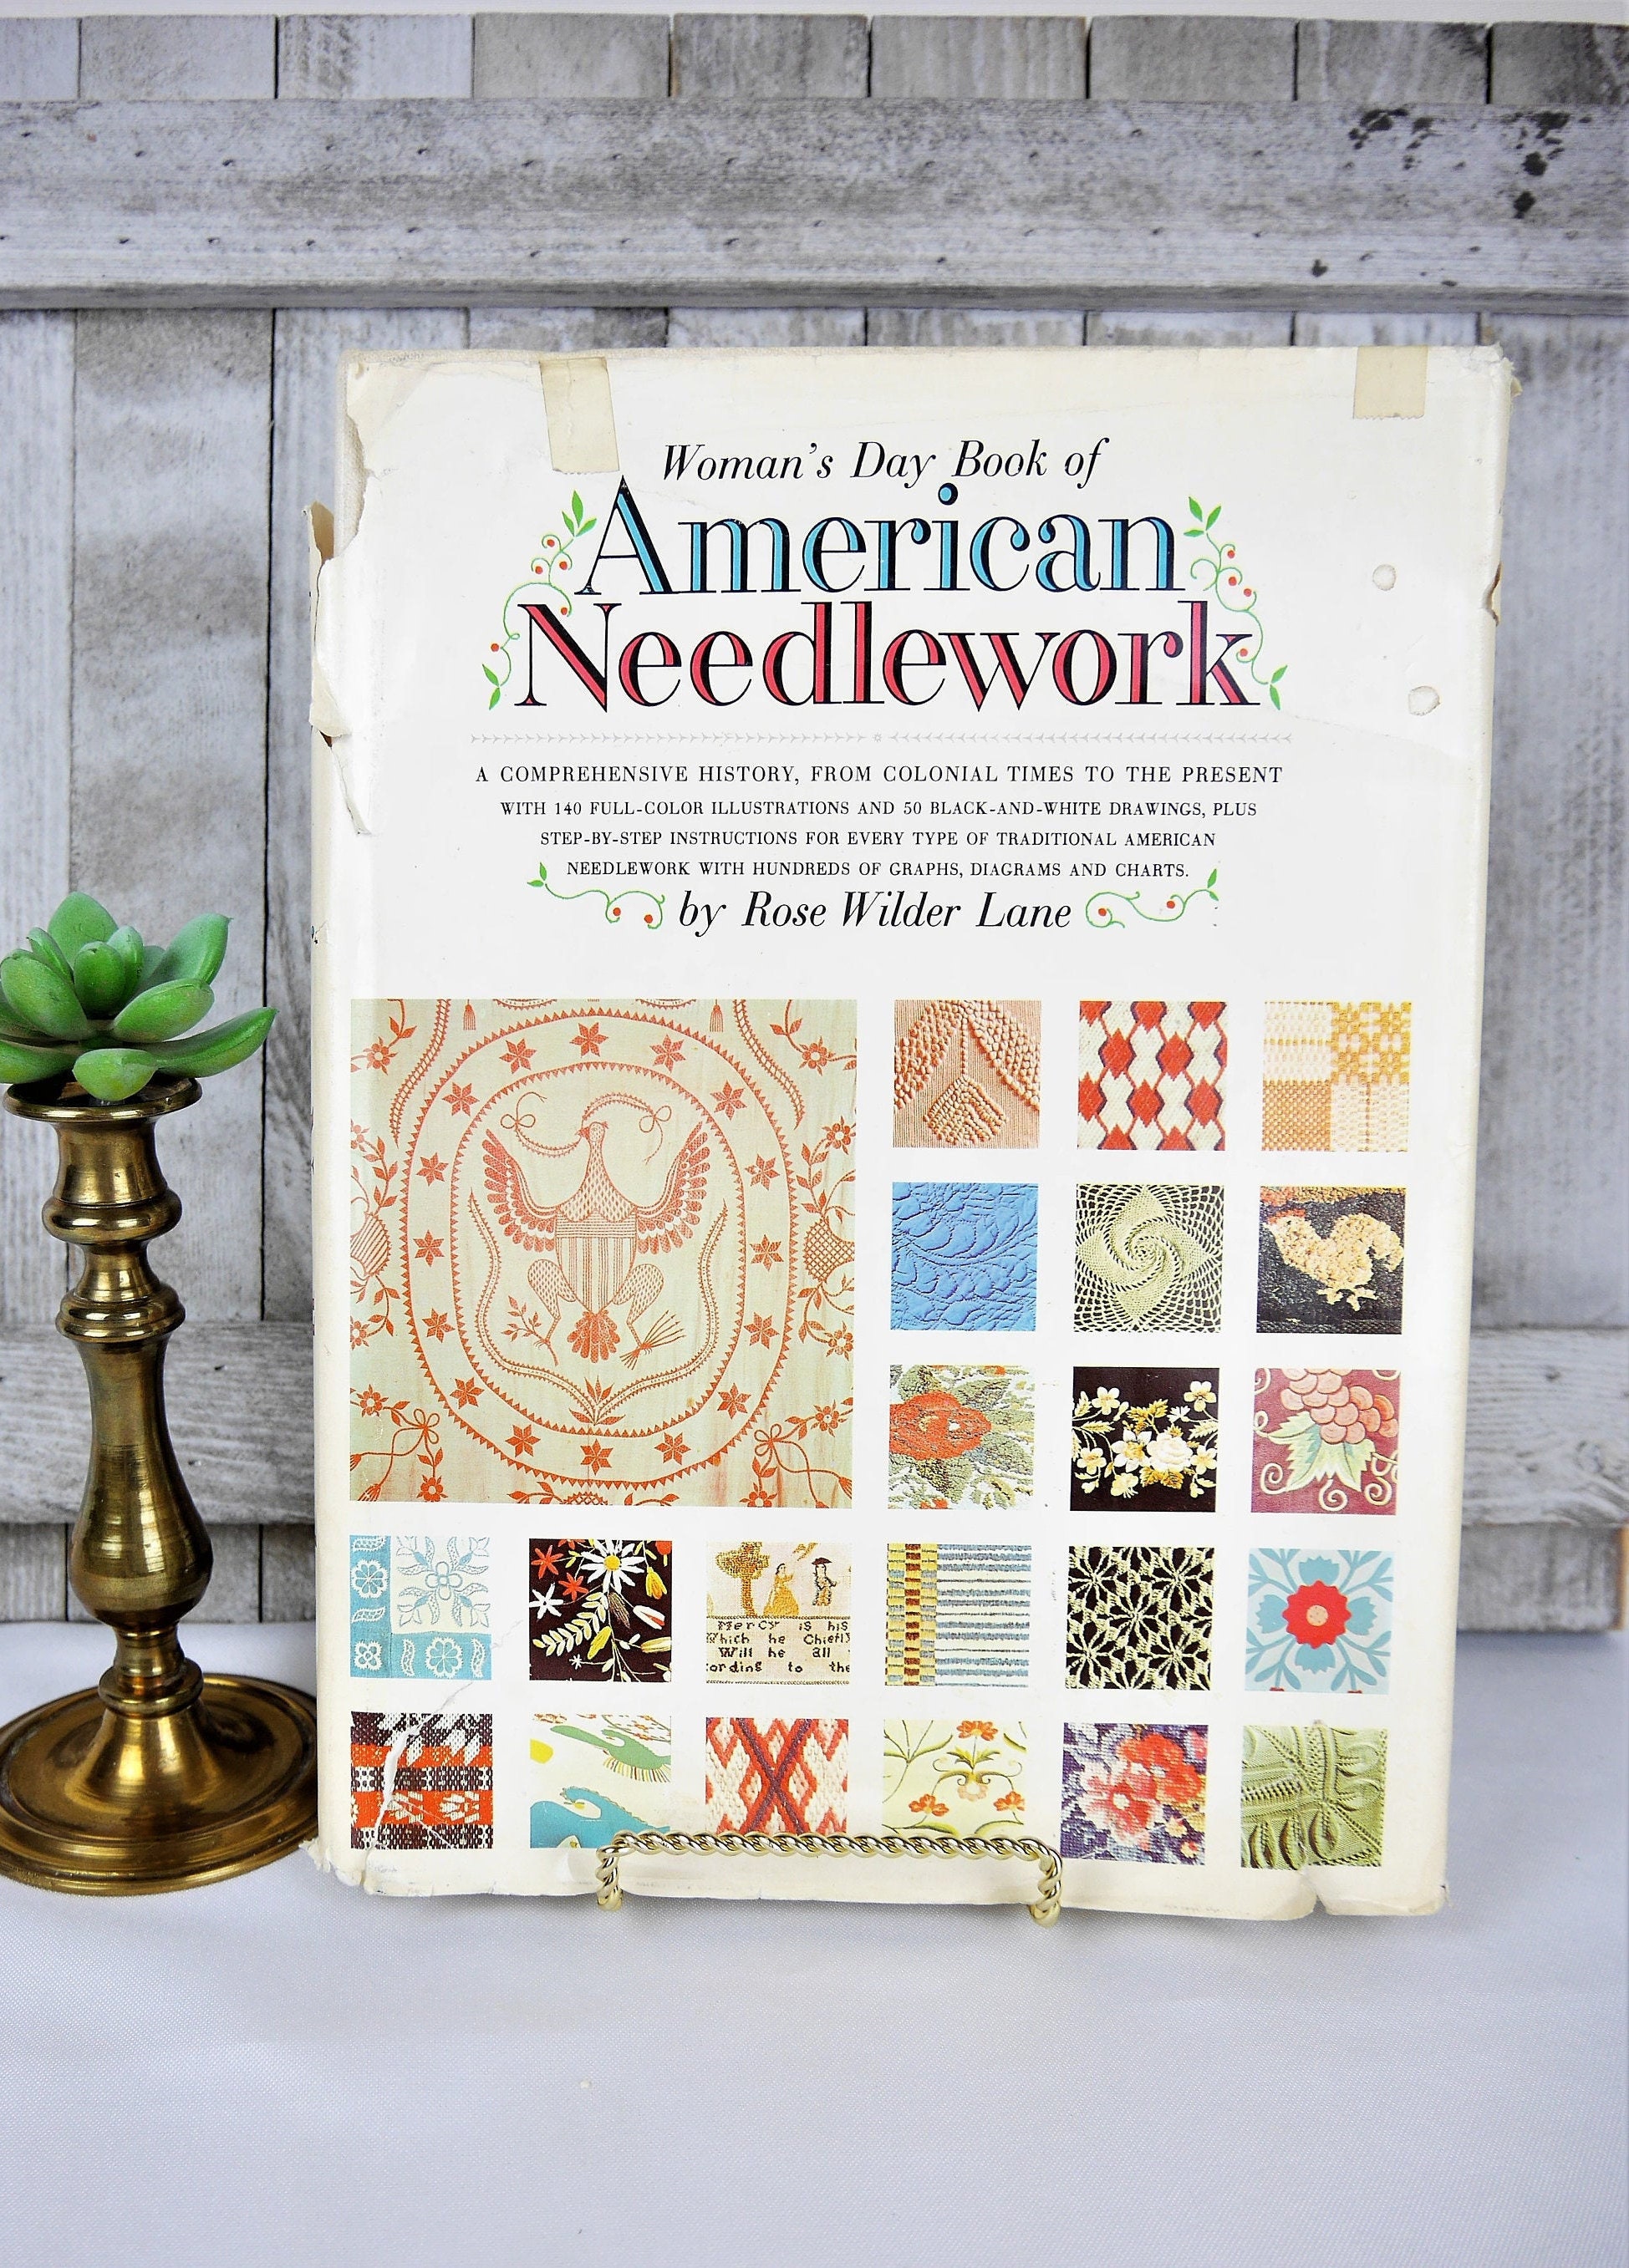 Woman's Day Book of American Needlework Hardback 1963 - Etsy